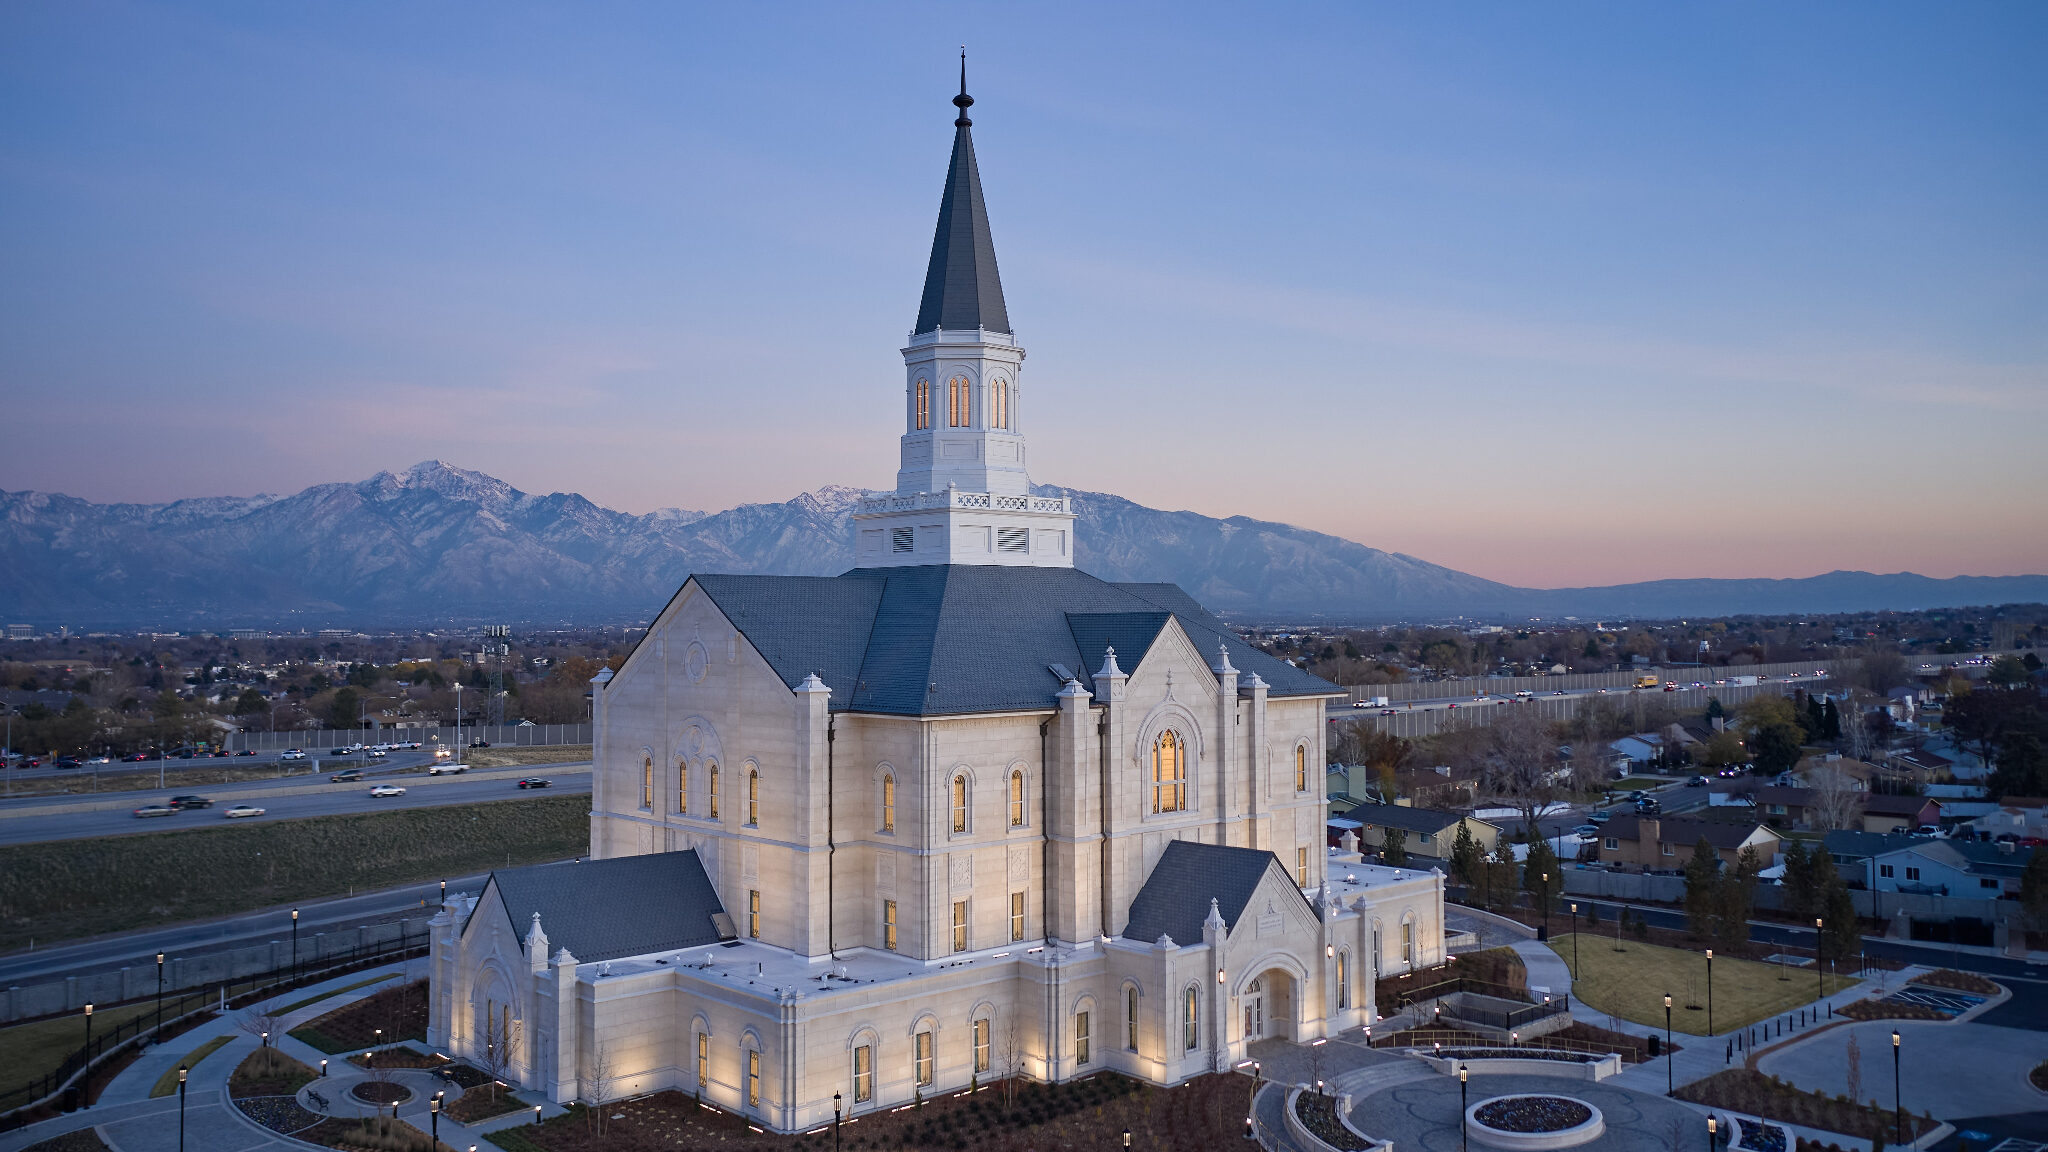 The Taylorsville, Utah Temple...